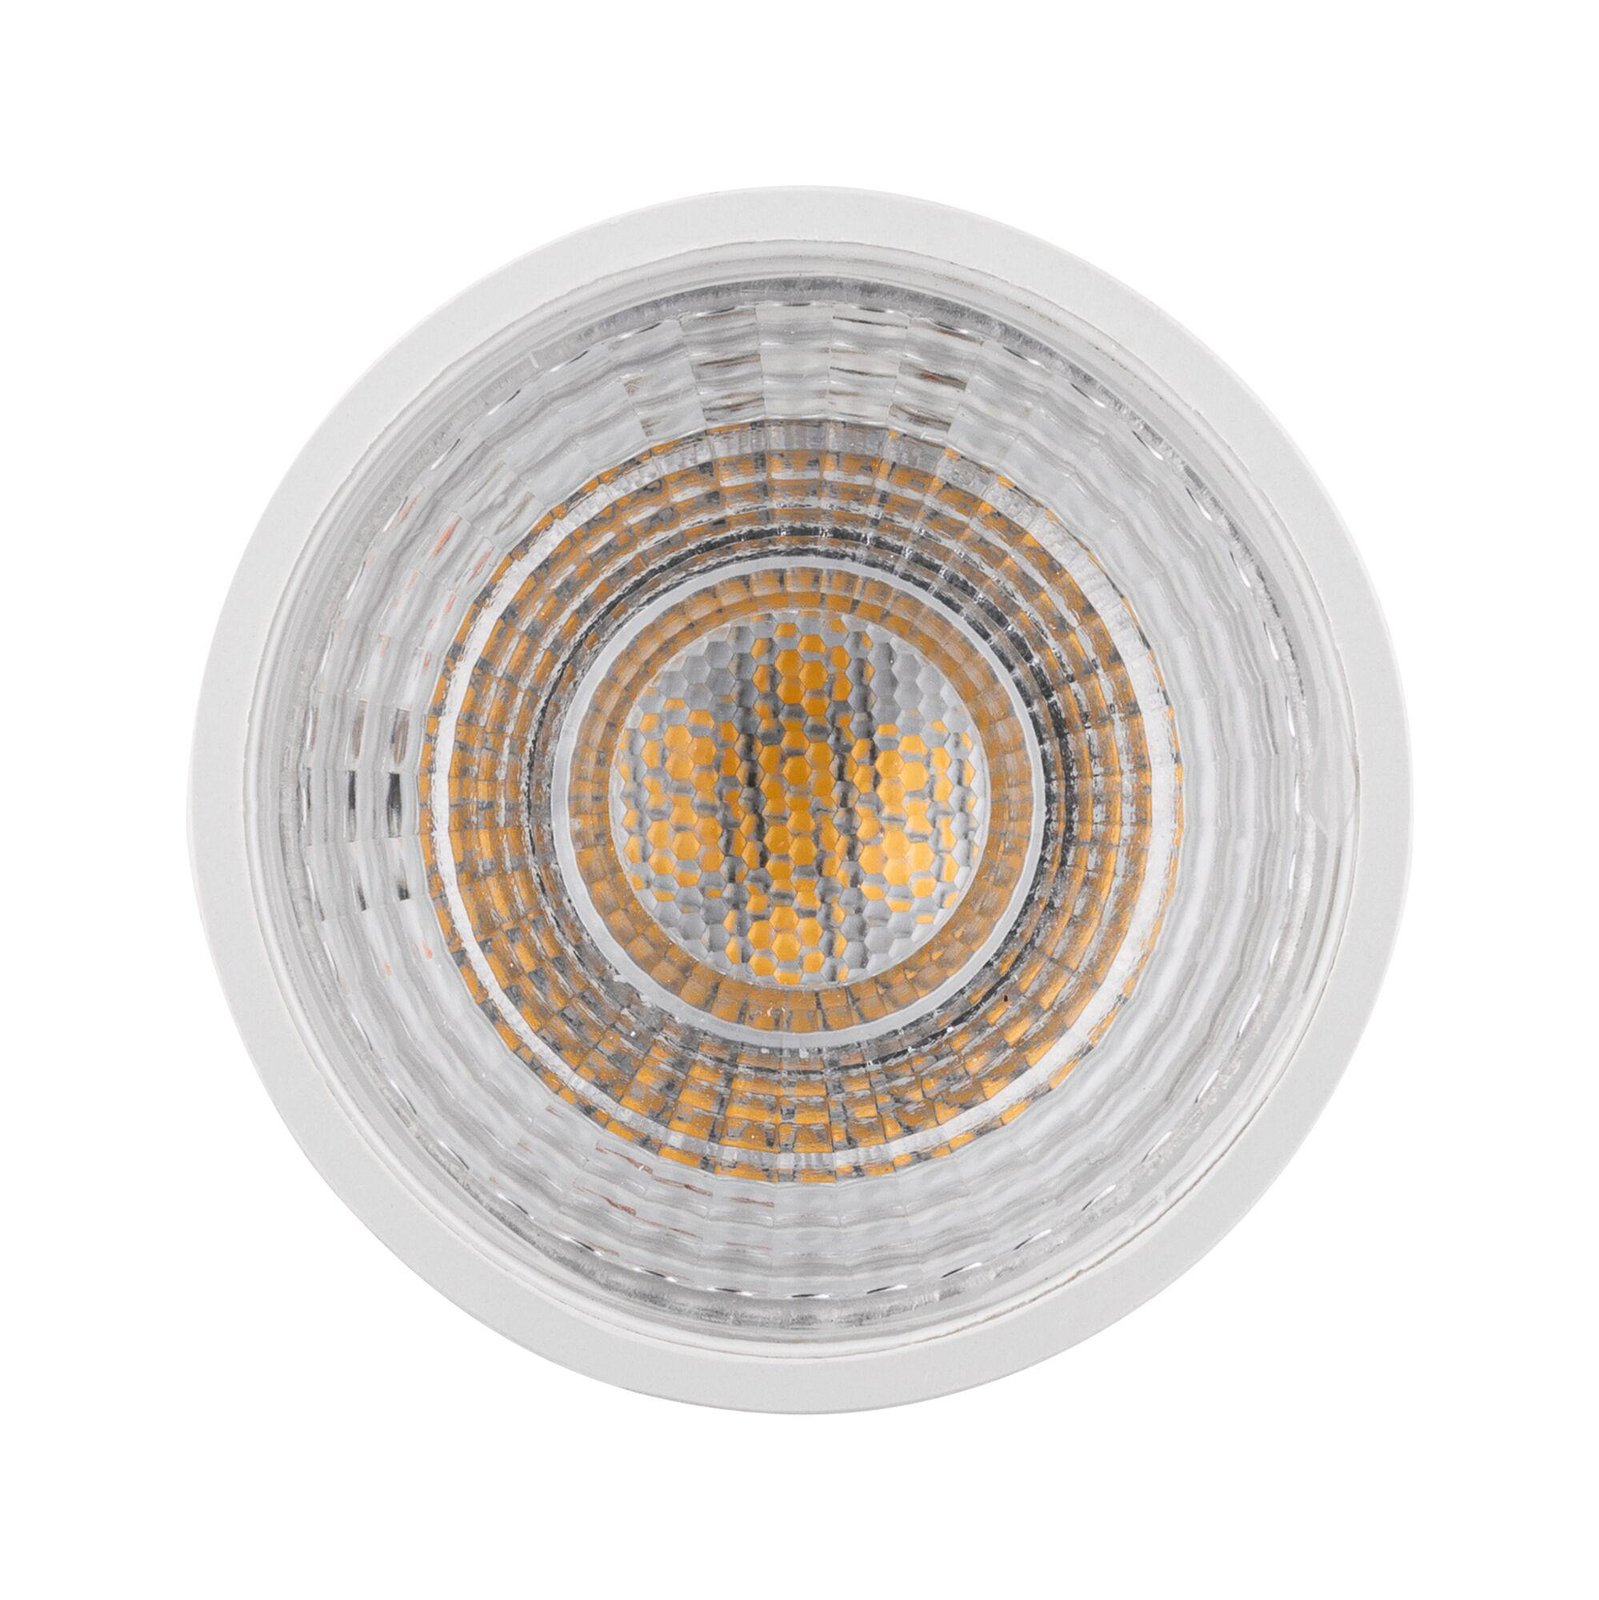 Paulmann LED bulb 2,700 K white GU10 8 W dimmable 36°